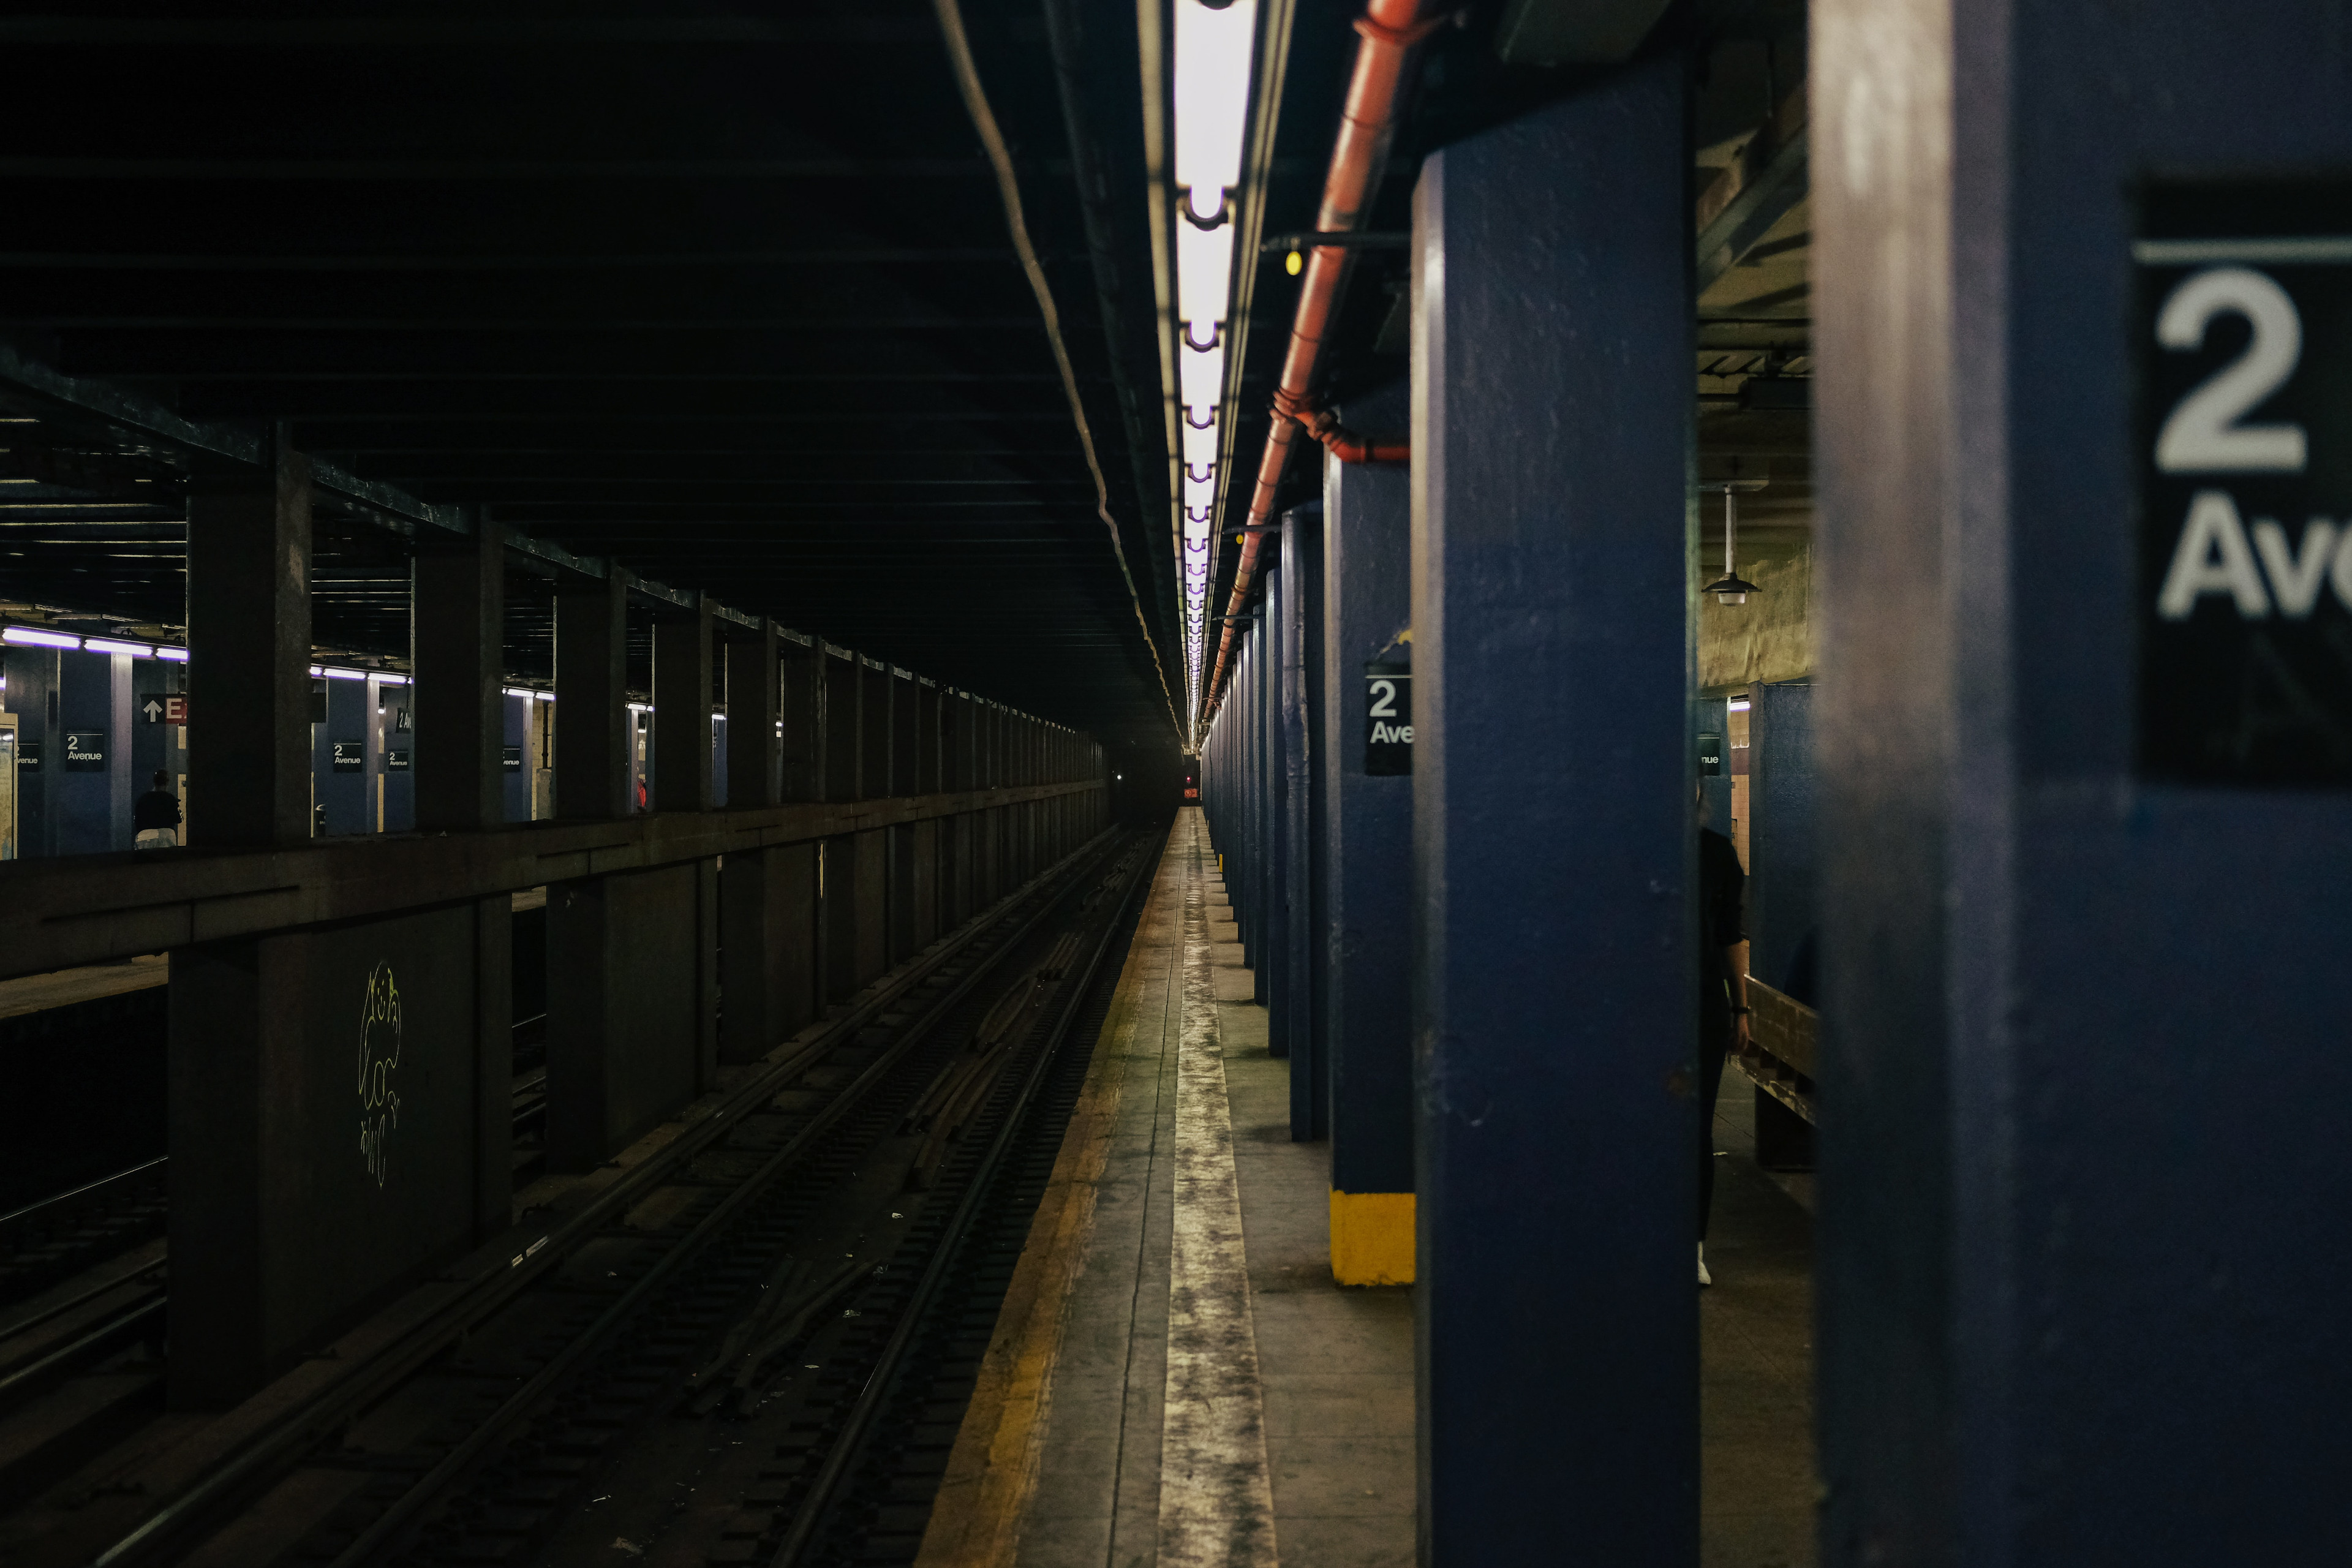 General 3840x2560 landscape train station railway Ubuntu subway New York City underground